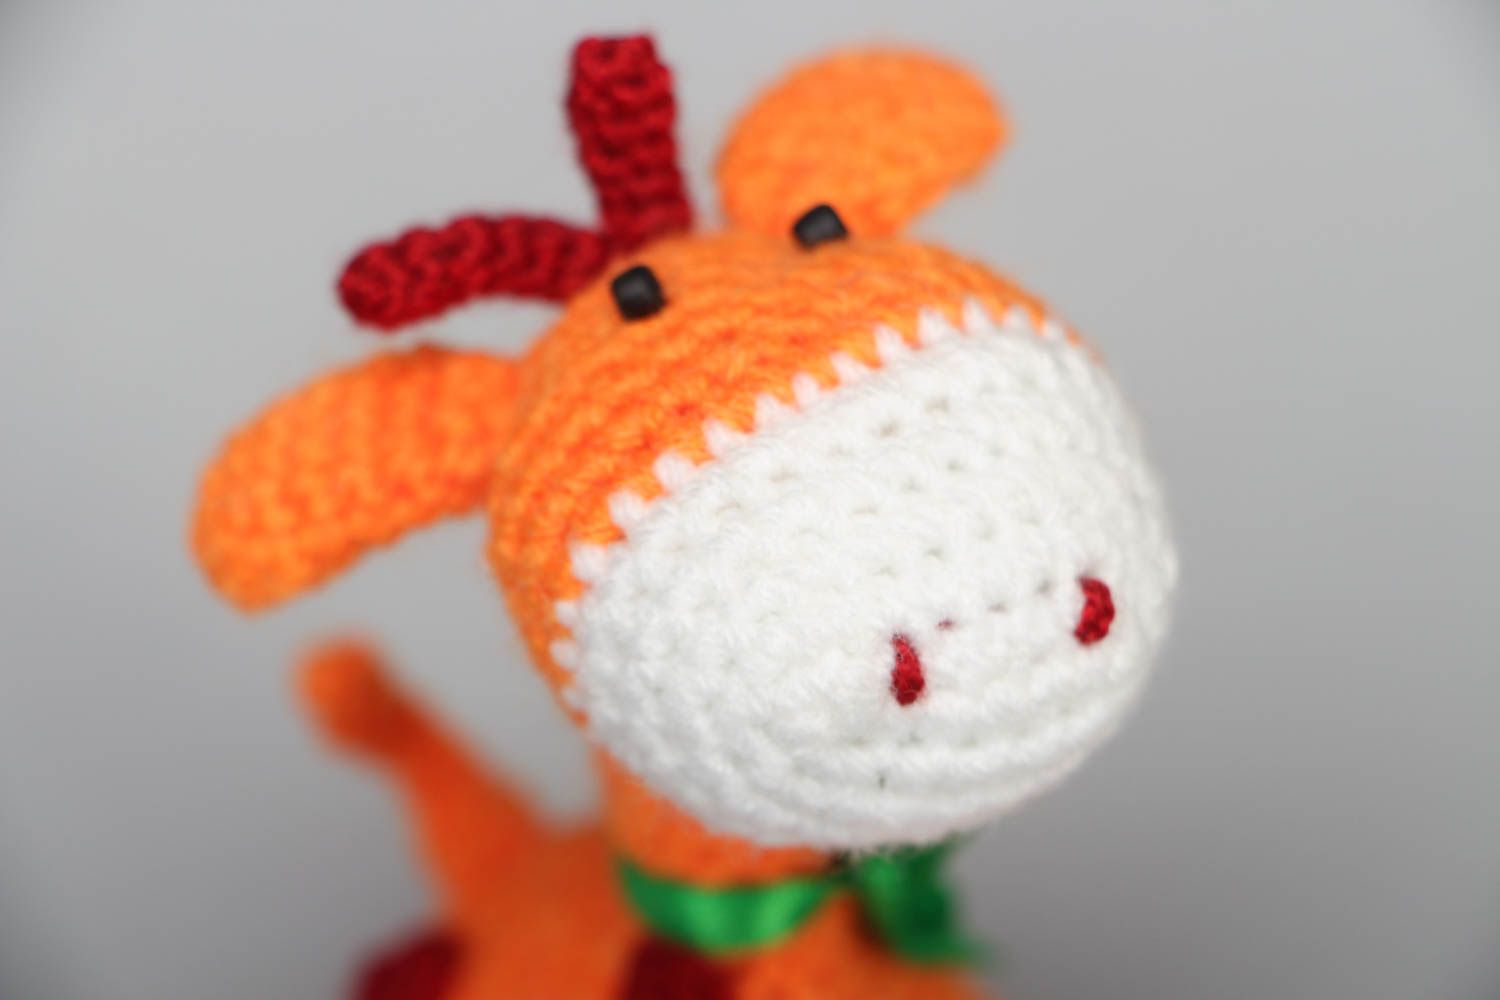 Soft crochet toy Giraffe photo 2